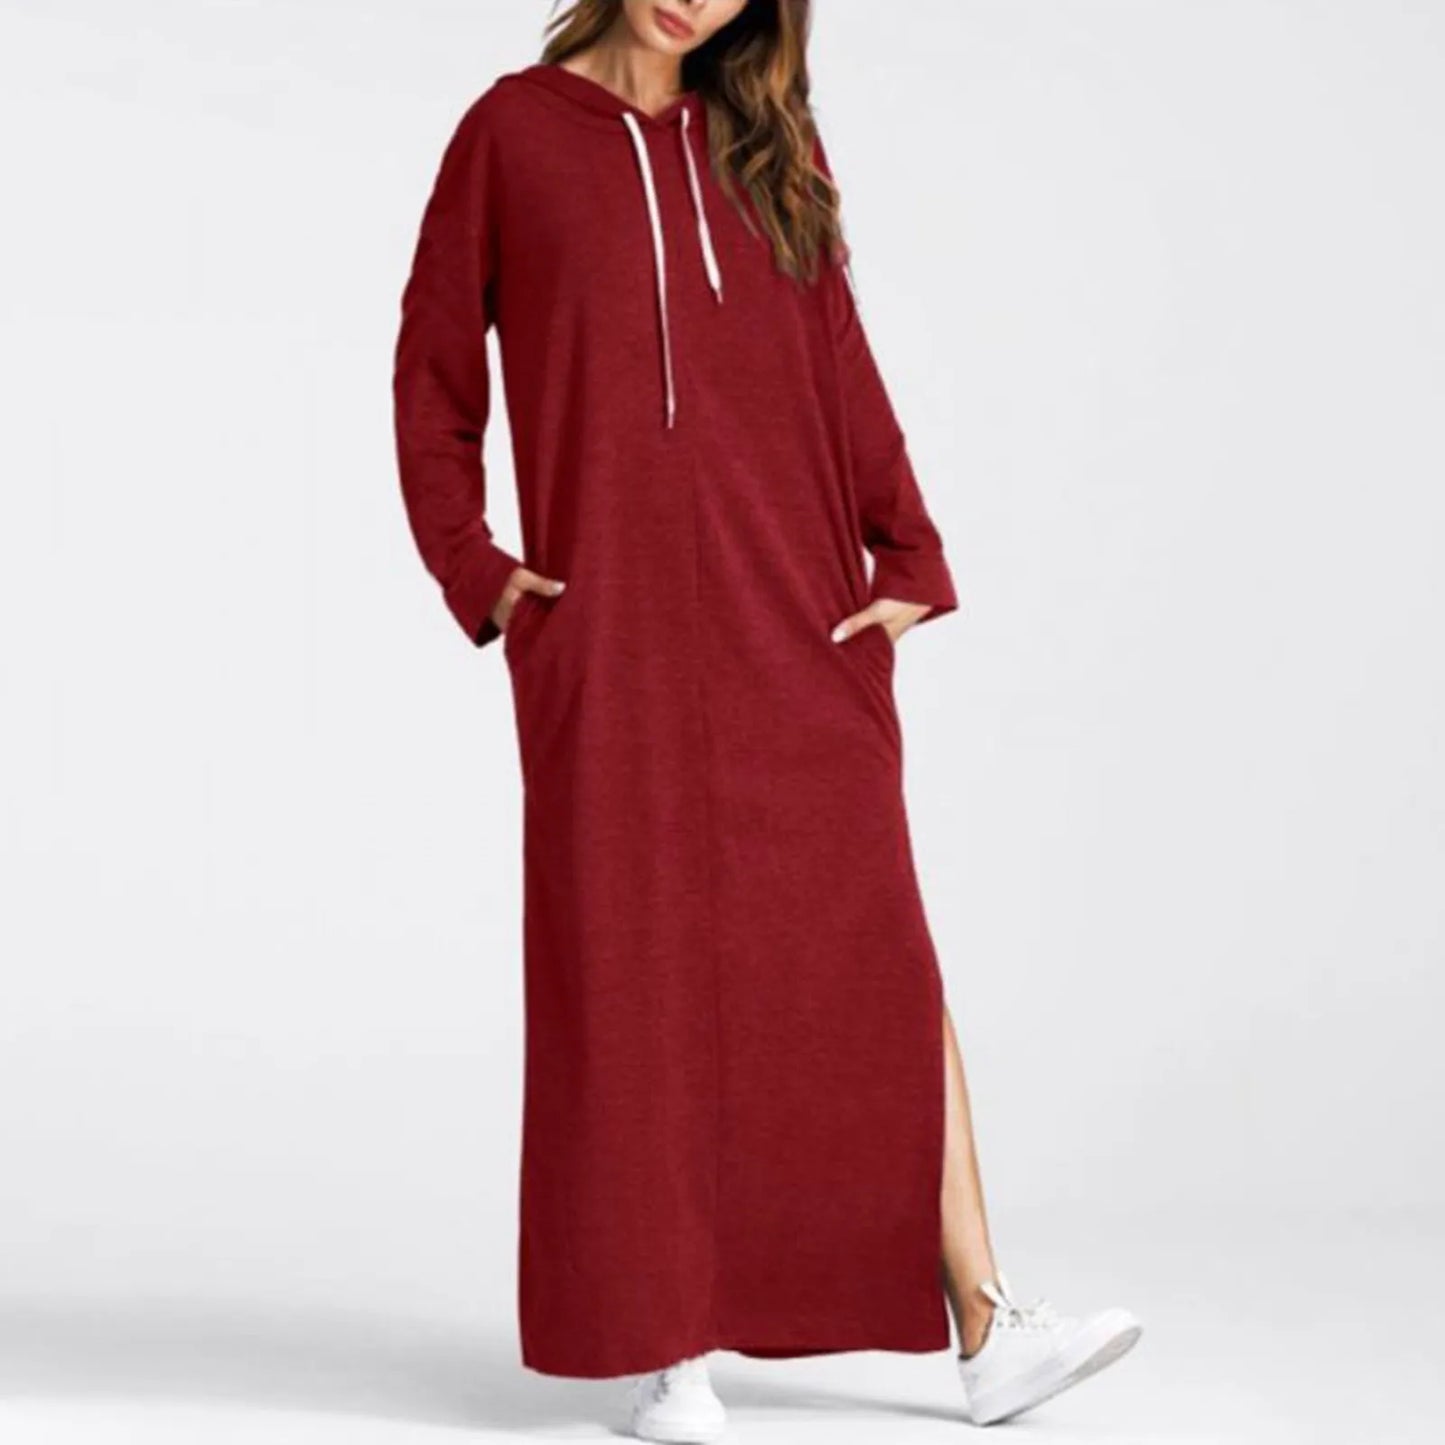 JuliaFashion - Women Maxi Casual Solid Color Drawstring Long Hooded With Pockets Autumn Long Sleeve Hoodies Sweatshirt Dress